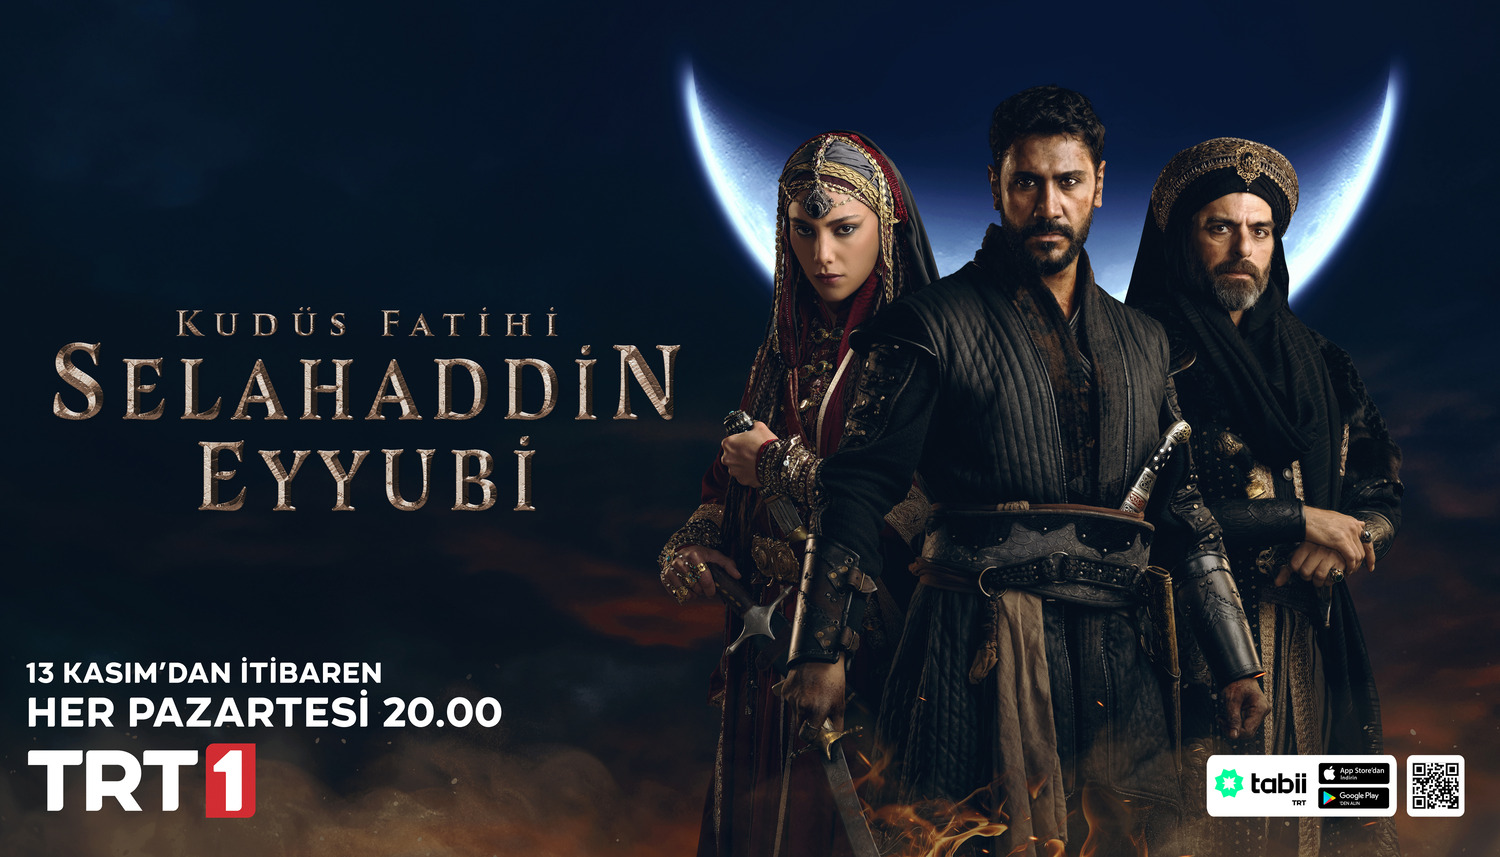 Extra Large TV Poster Image for Kudüs Fatihi: Selahaddin Eyyubi (#4 of 4)